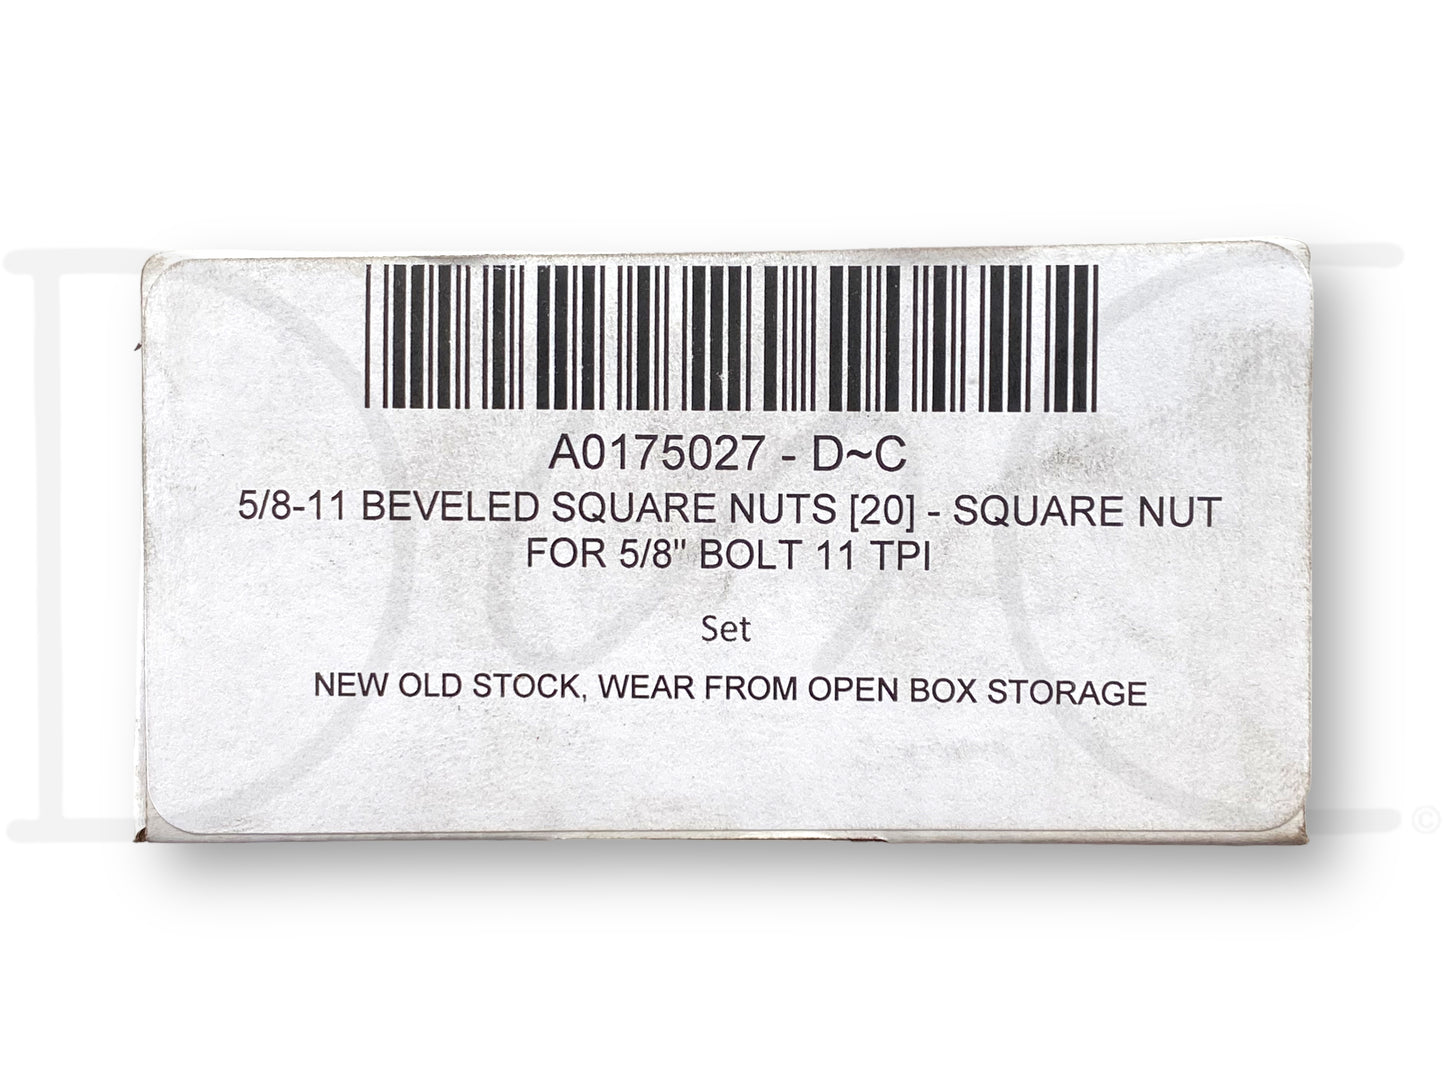 5/8-11 Beveled Square Nuts [20] - Square Nut For 5/8" Bolt 11 Tpi